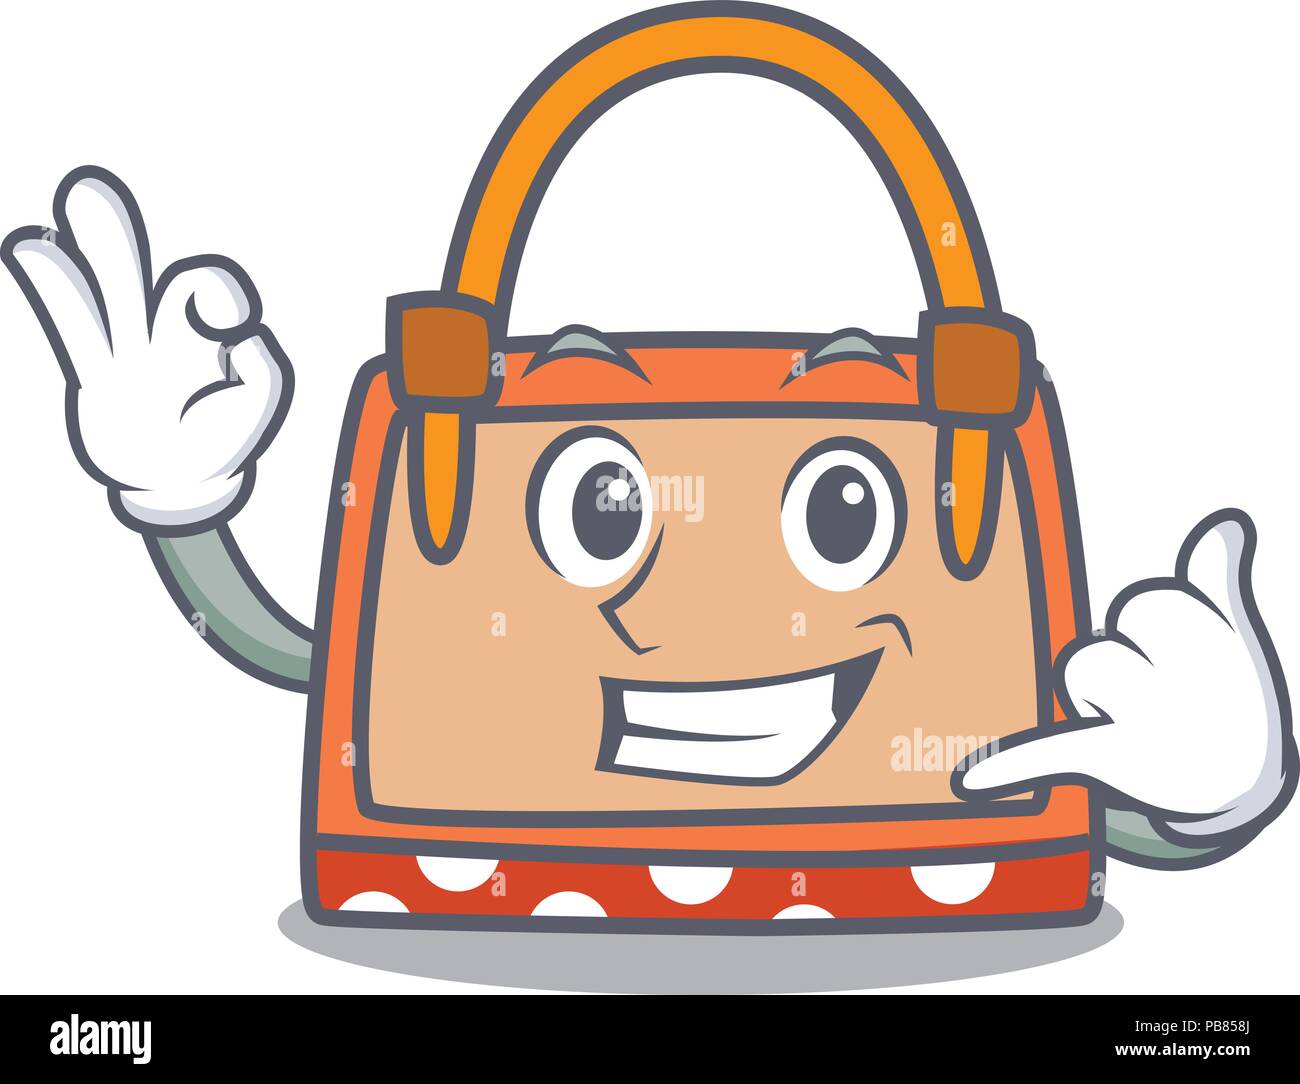 Call me hand bag mascot cartoon Stock Vector